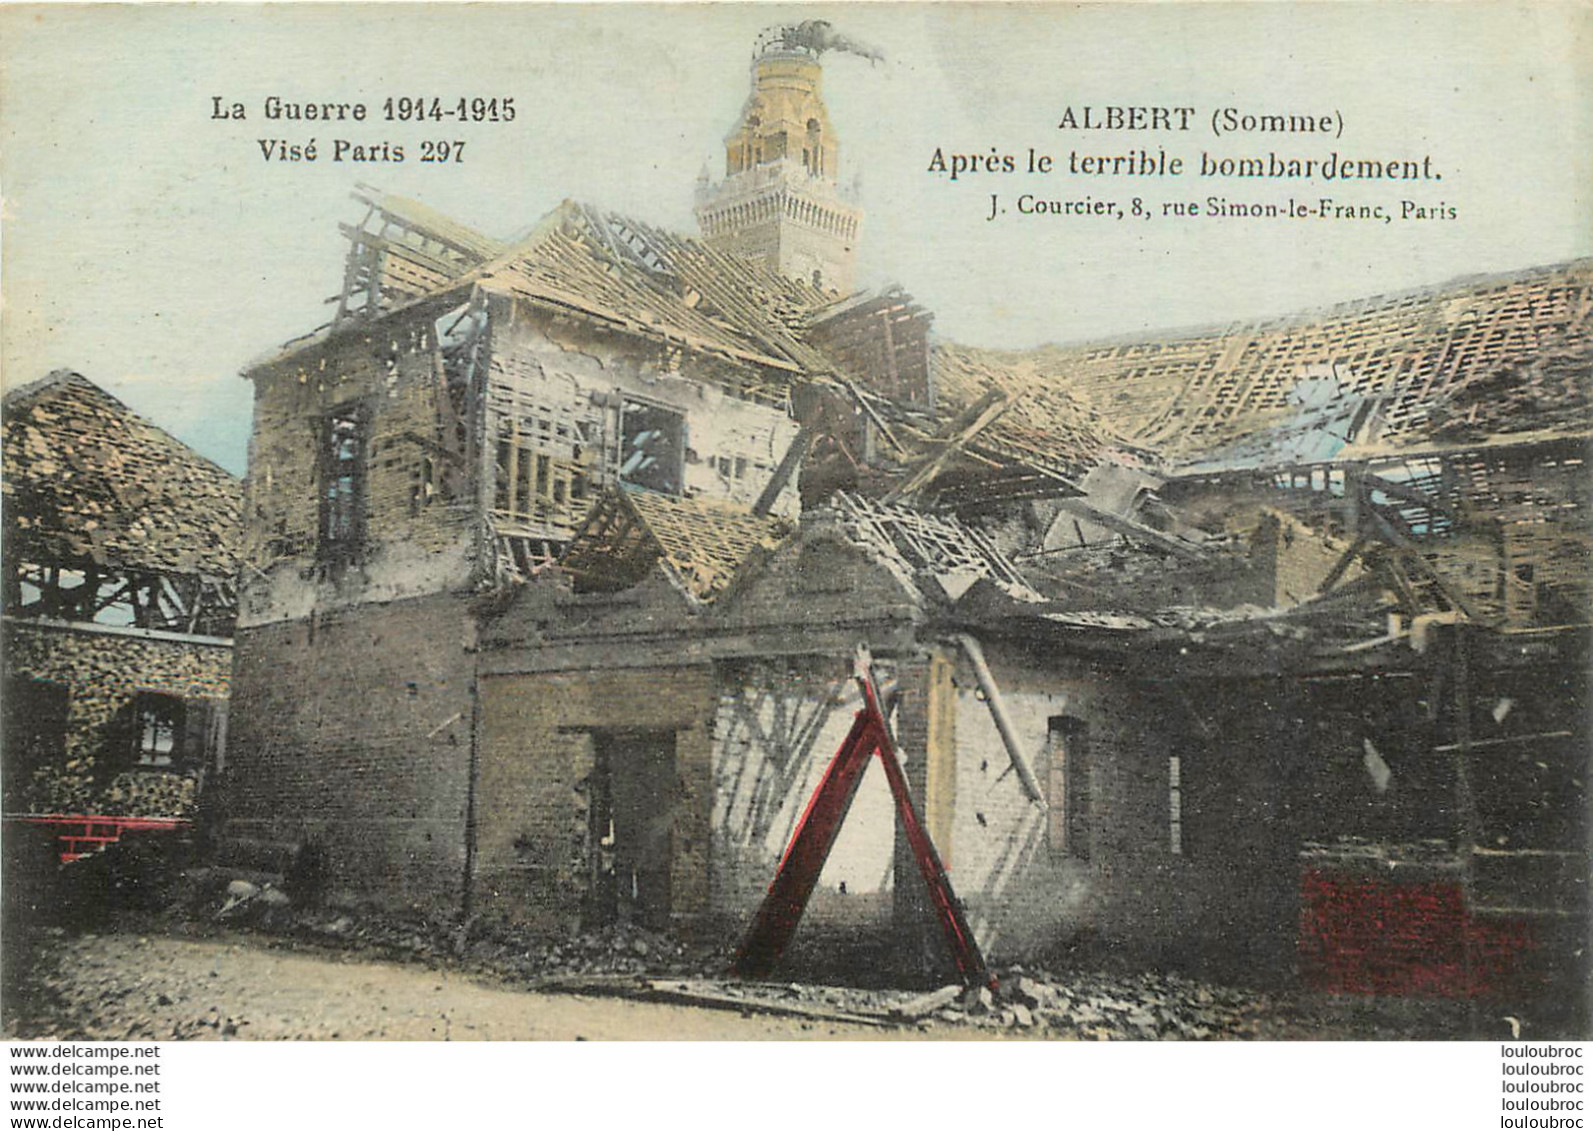 ALBERT LA GUERRE 1914-1915 APRES LE TERRIBLE BOMBARDEMENT EDITION COURCIER - Albert